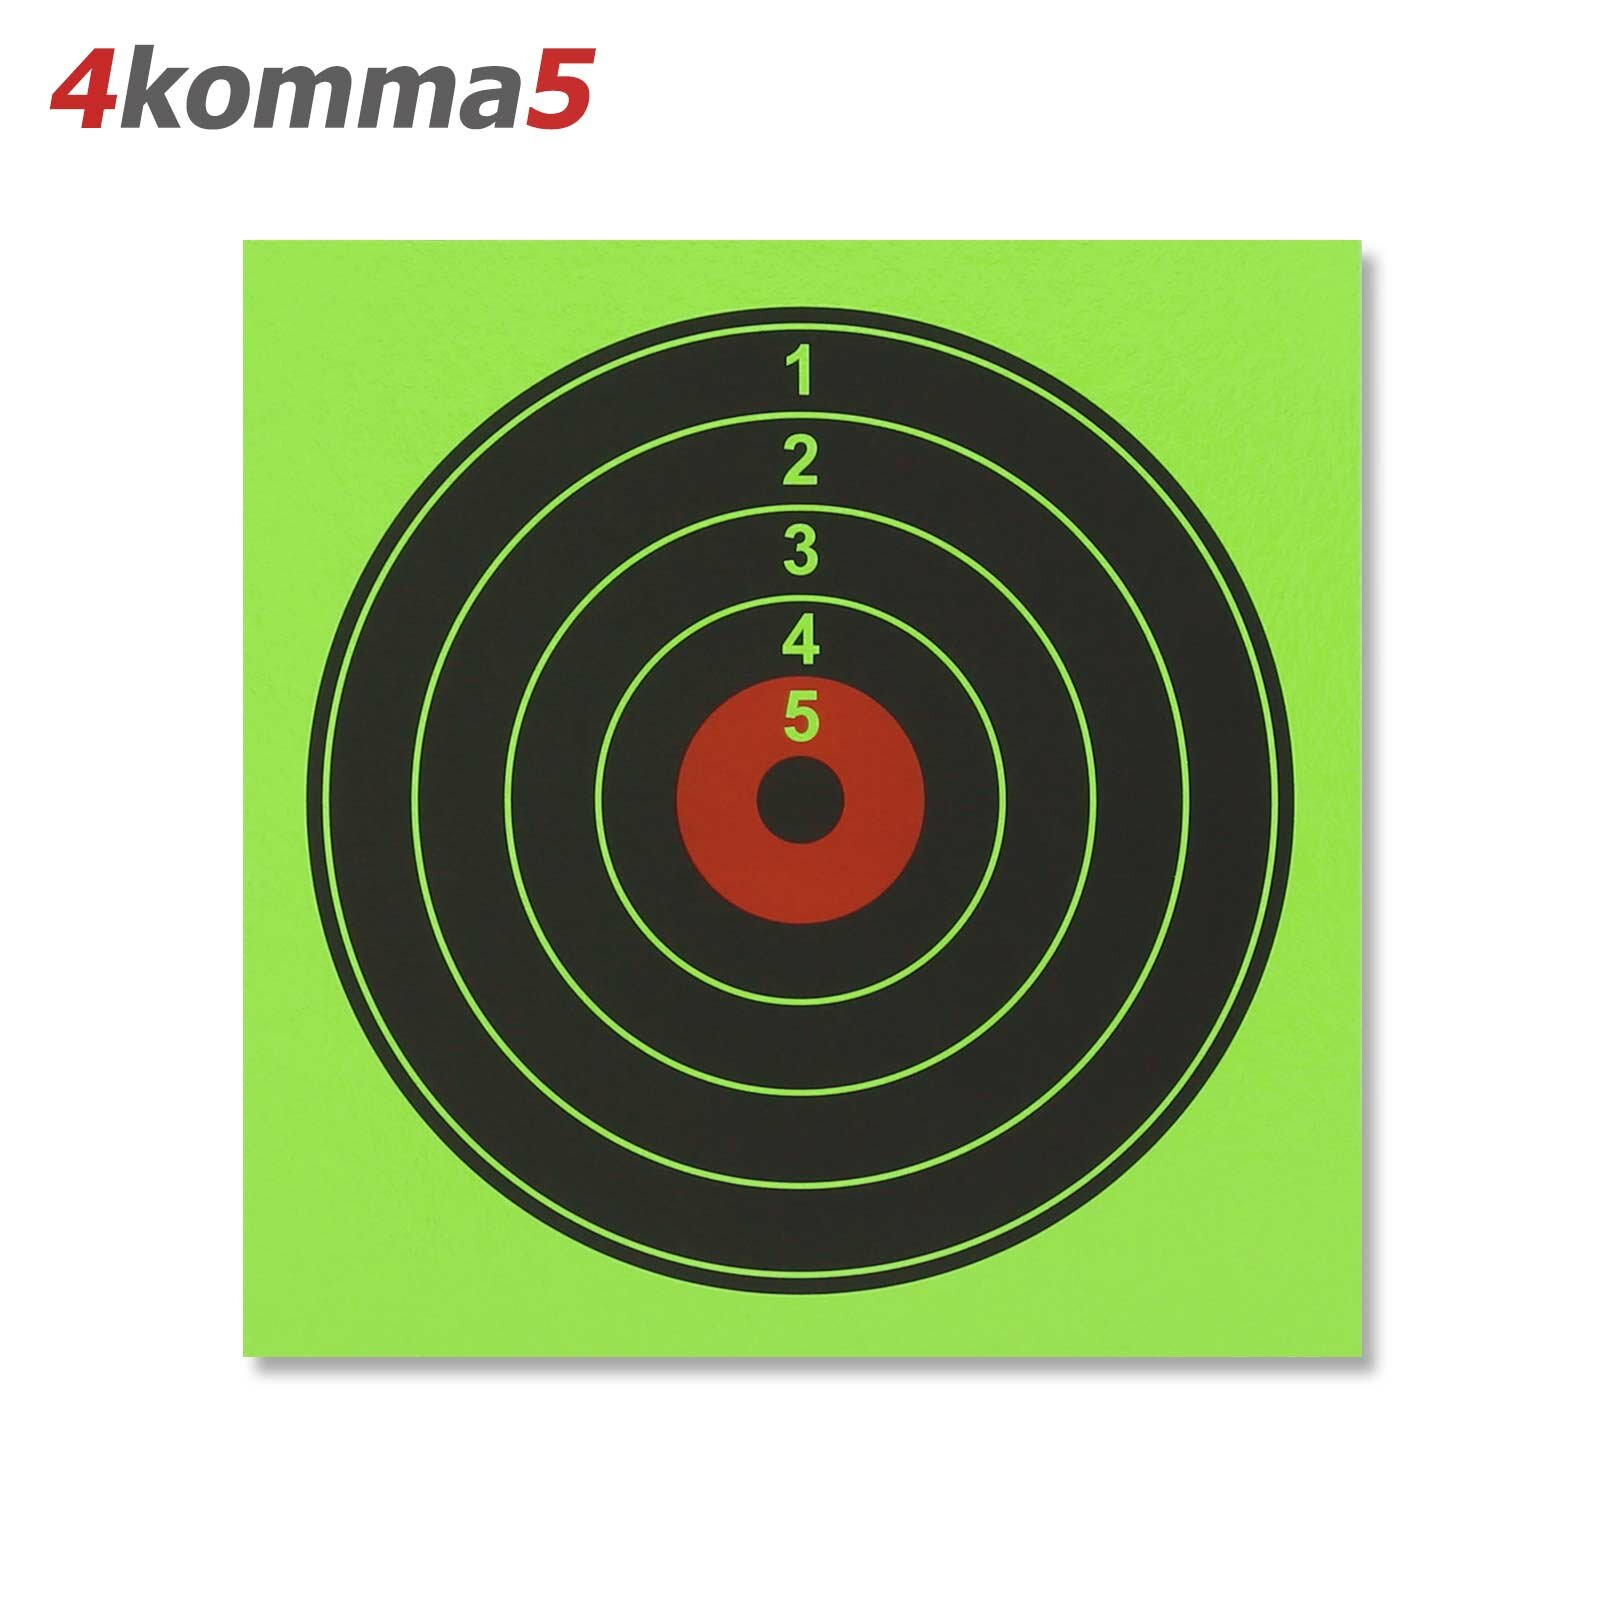 zielscheiben-paper-rifle-target-25er-pack-14-x-14-cm